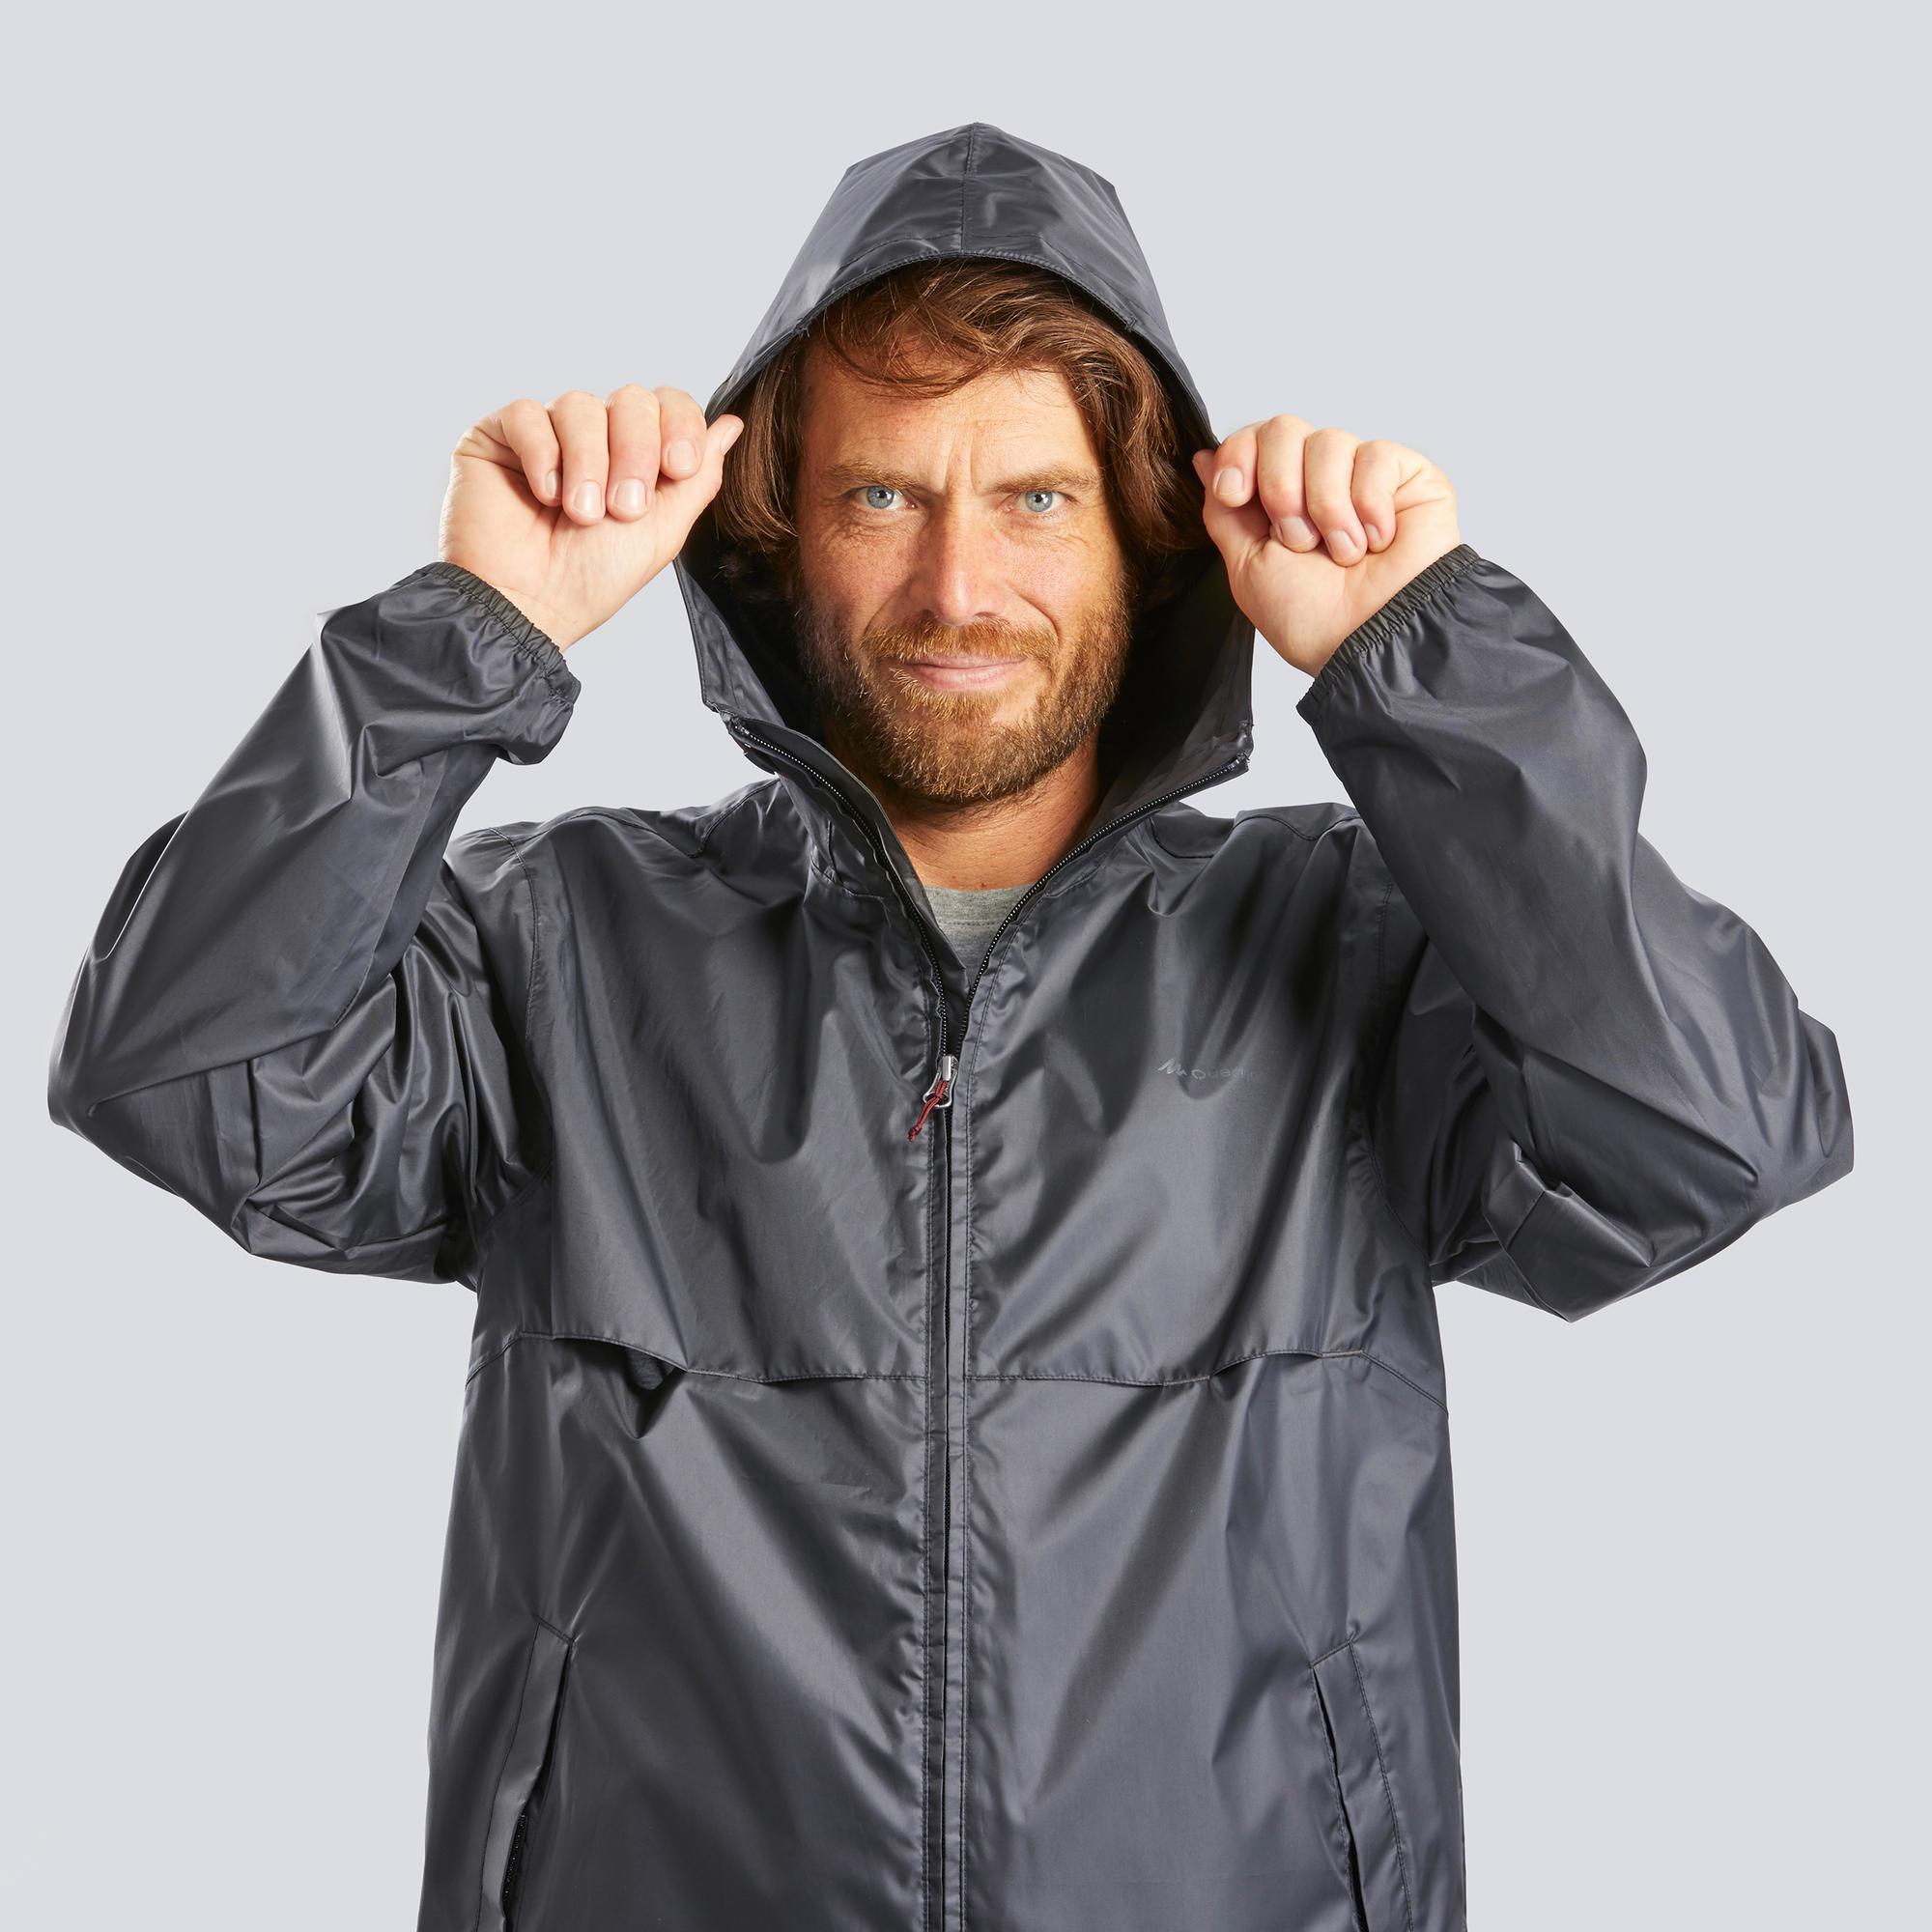 decathlon raincoat for men